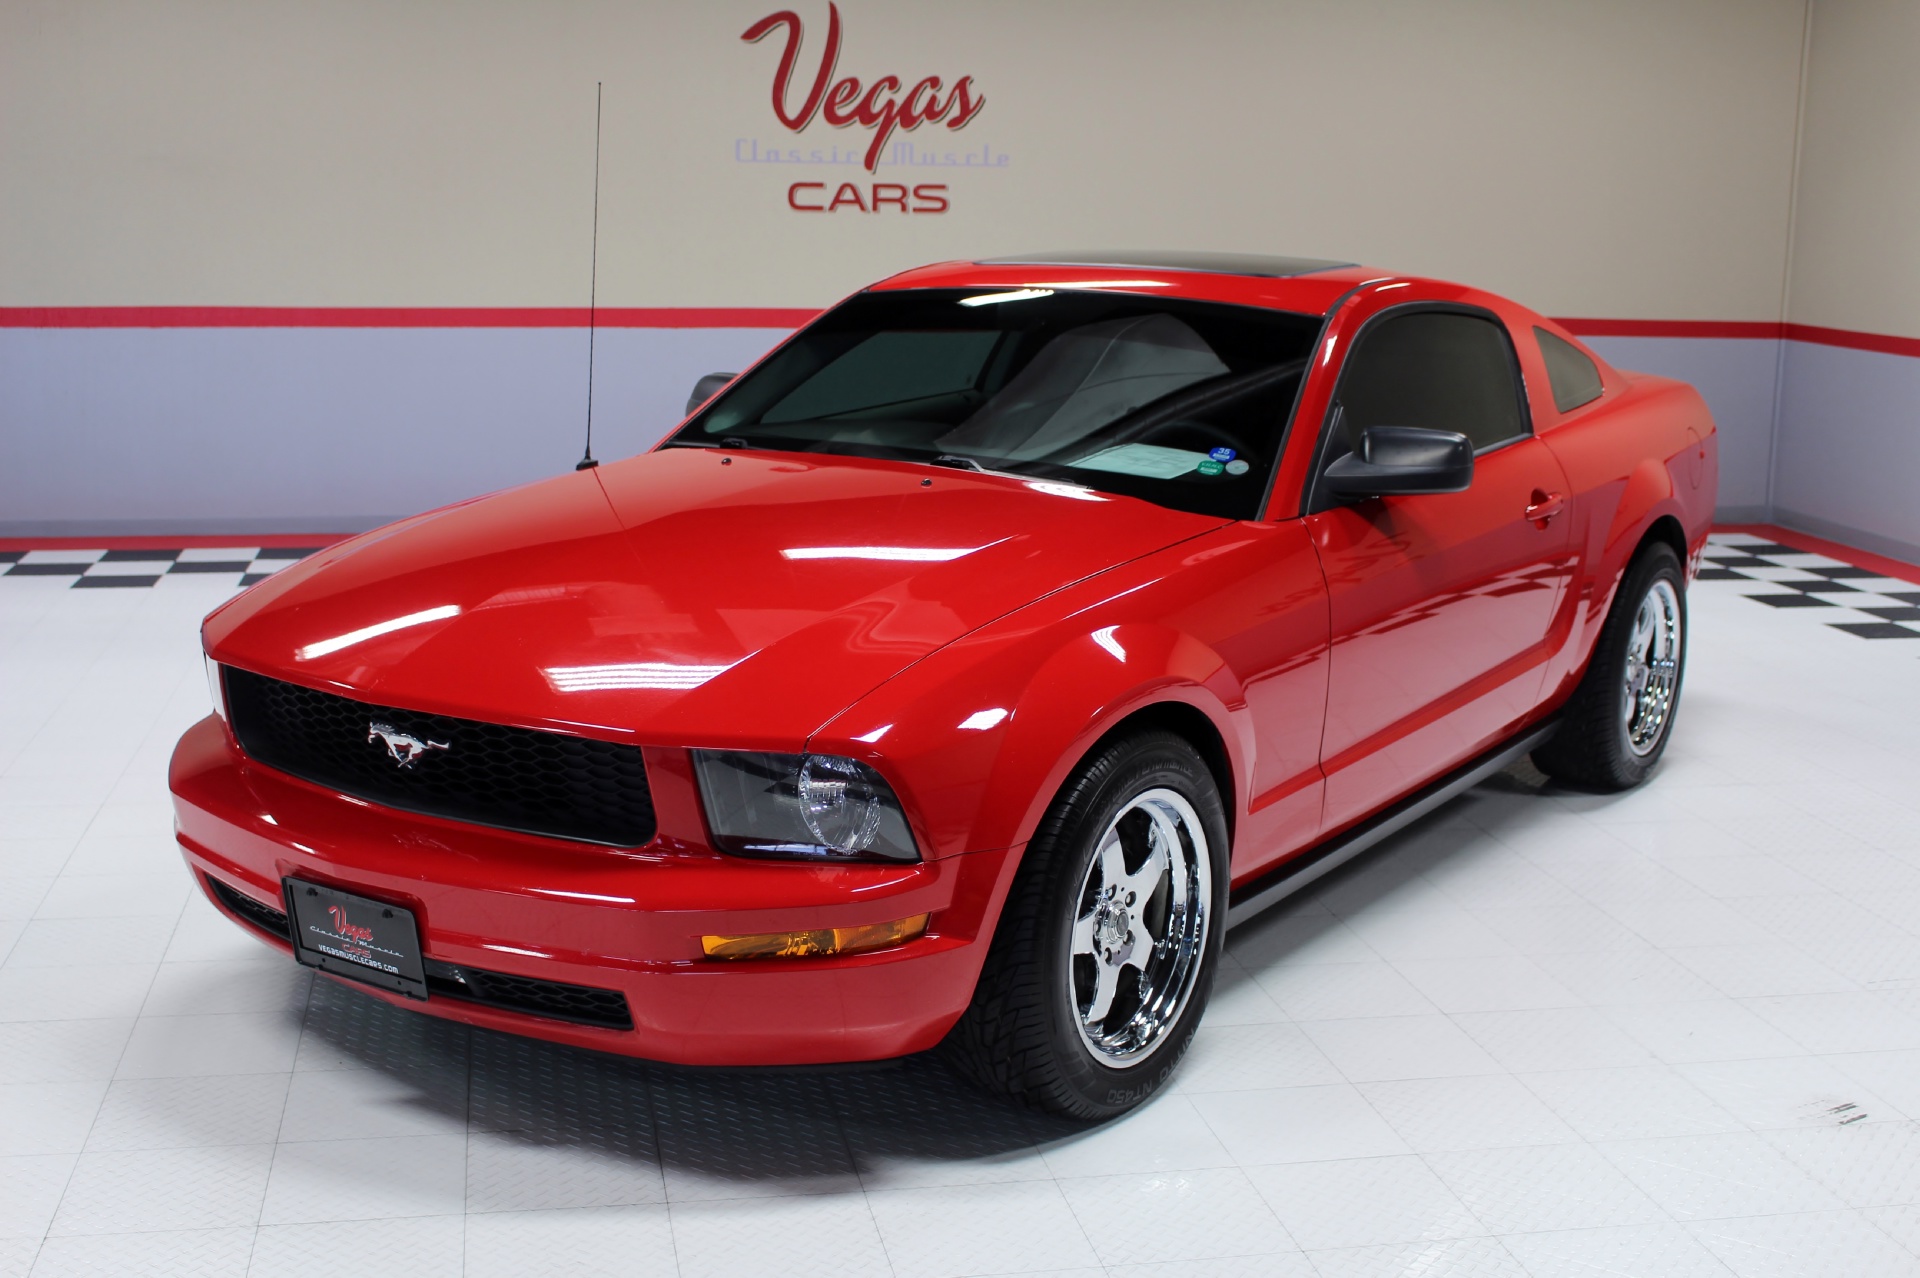 2005 Ford Mustang V6 Deluxe Stock # 14058V for sale near San Ramon, CA